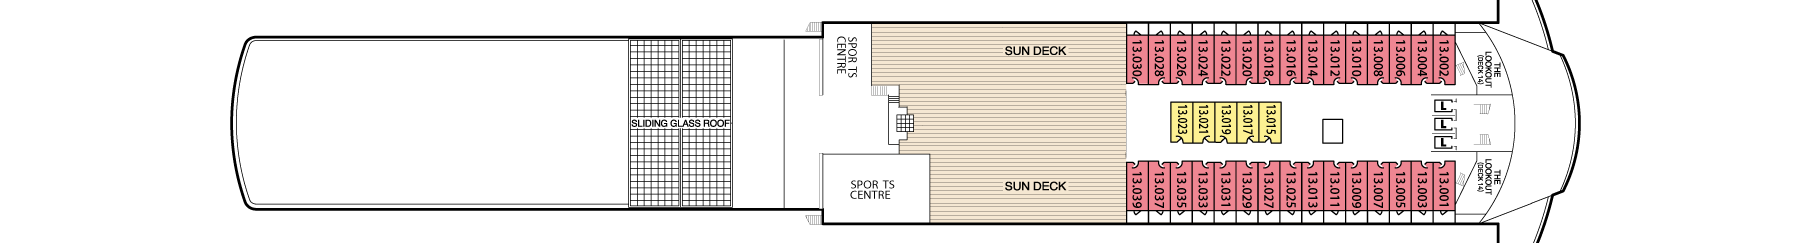 Планы палуб Queen Mary 2: Палуба 13